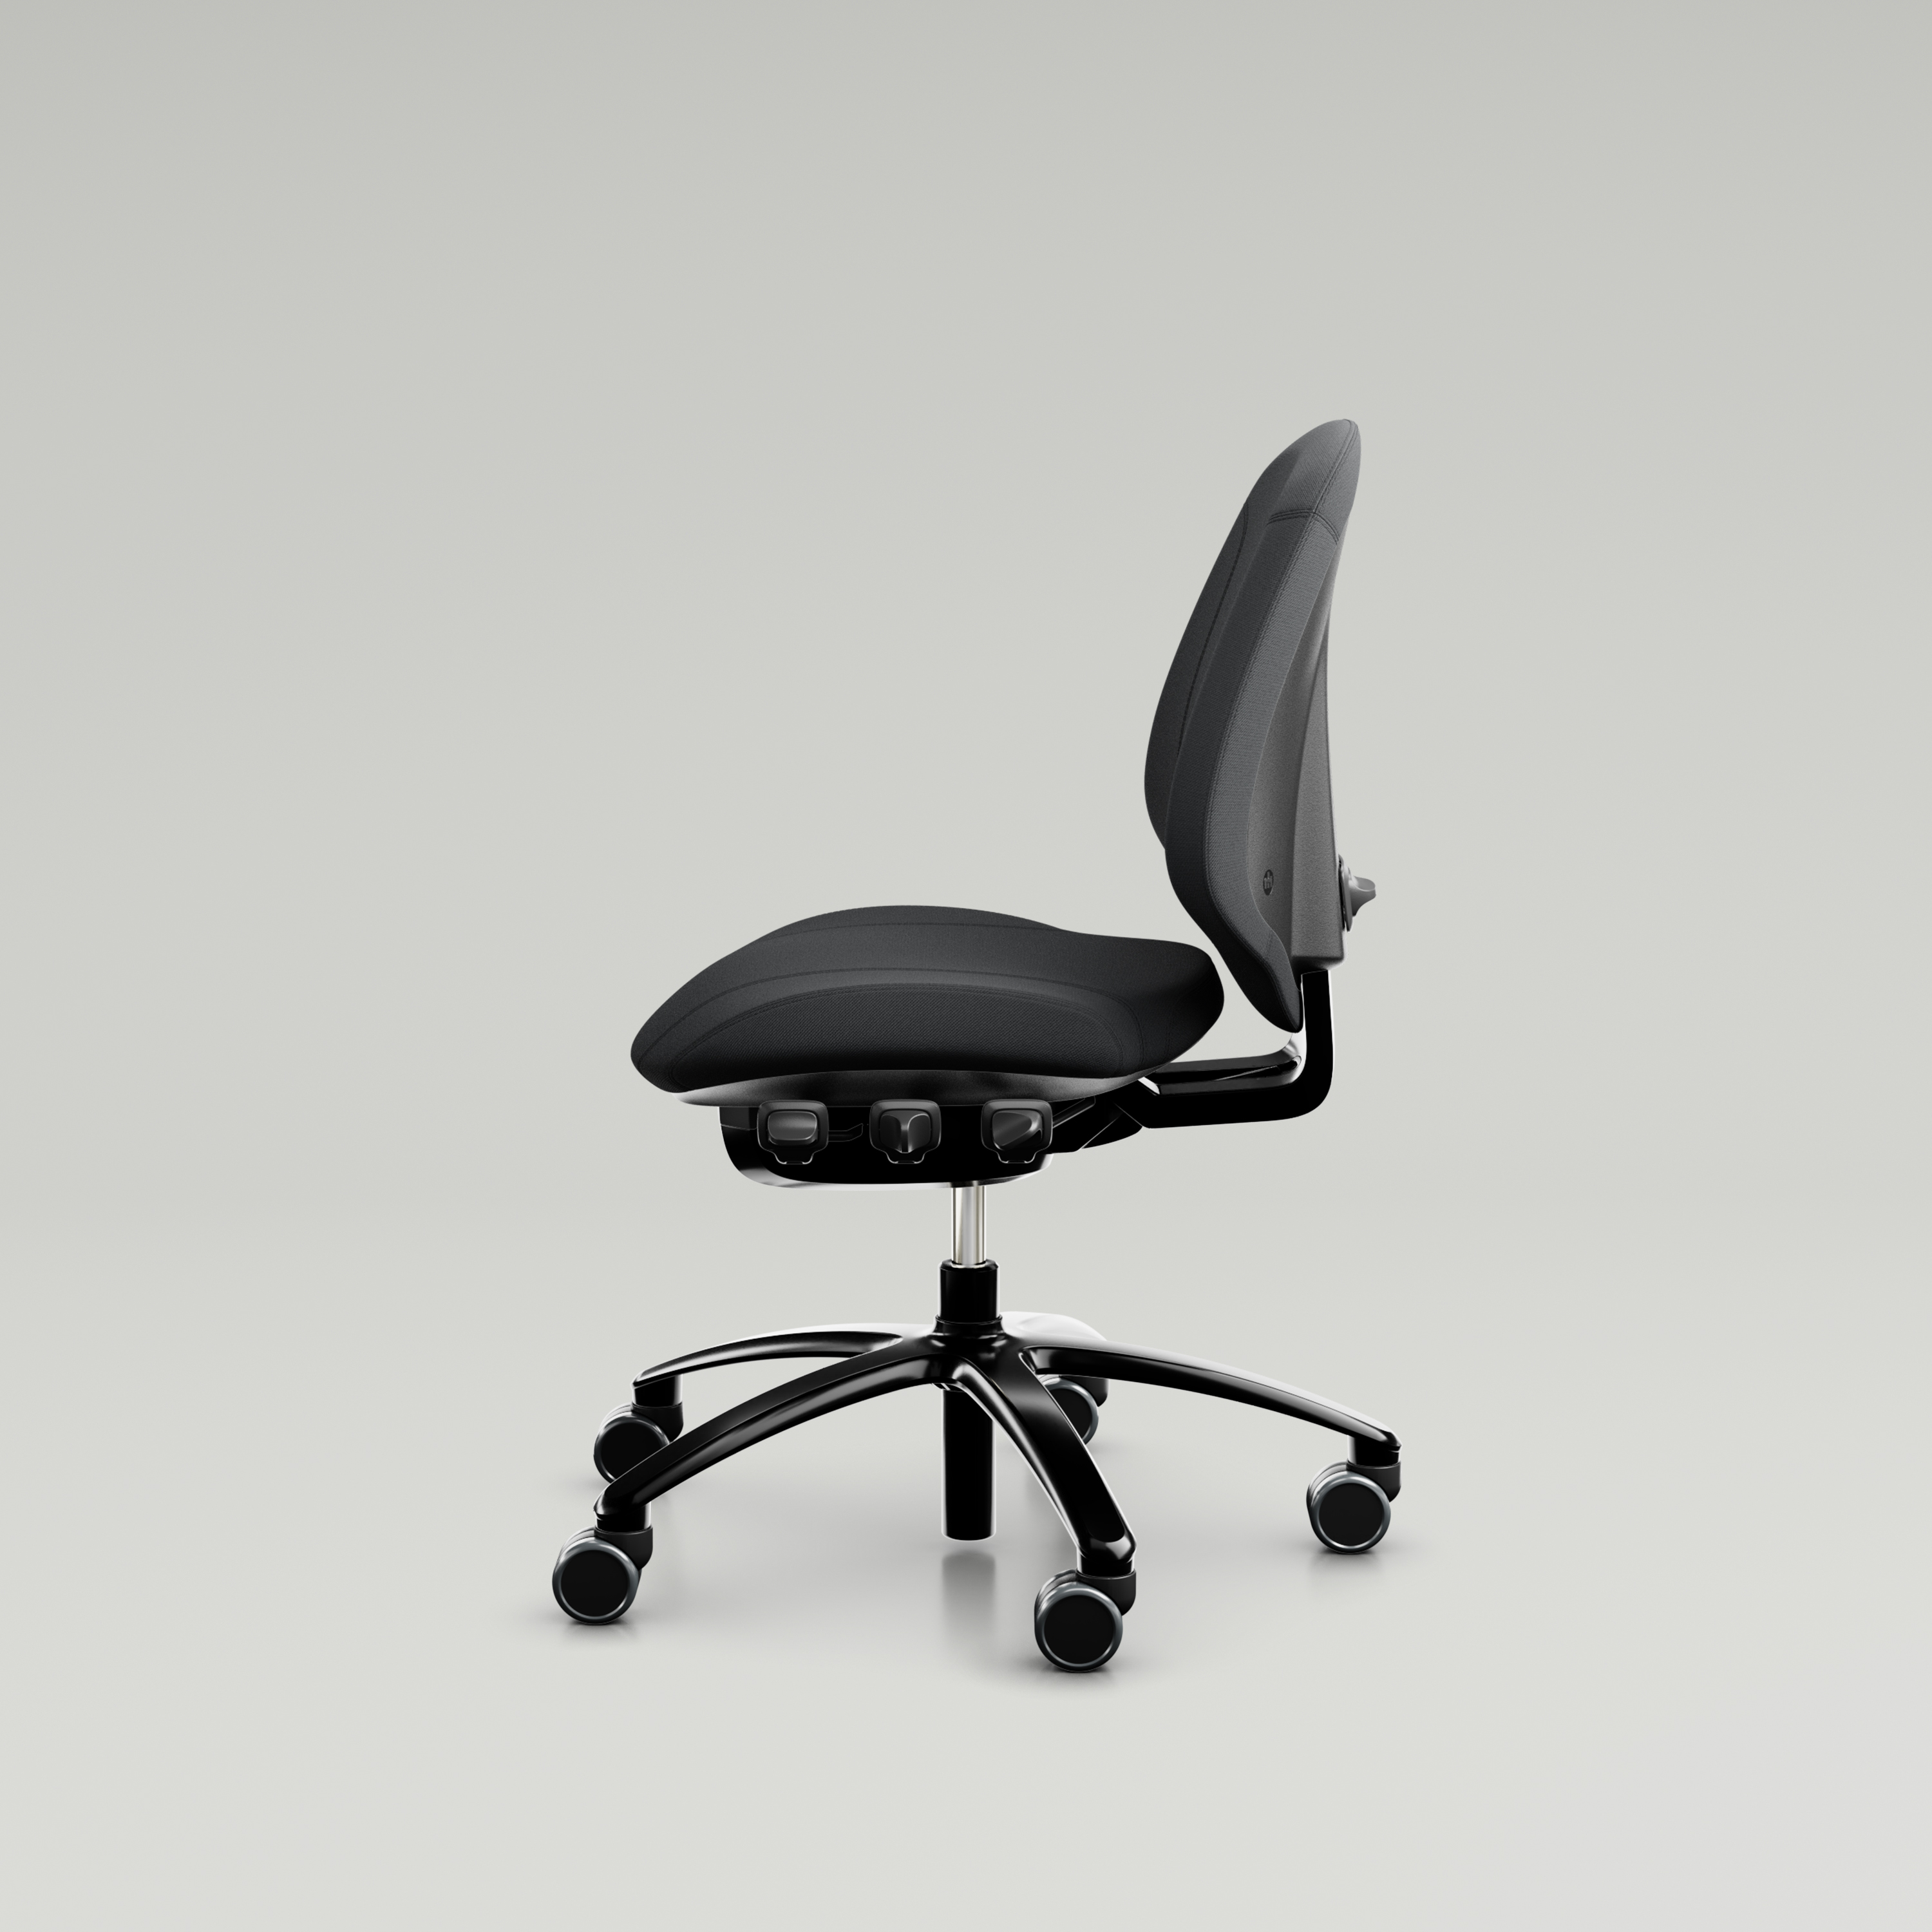 Office chair RH Mereo 200, dark gray fabric upholstery, black